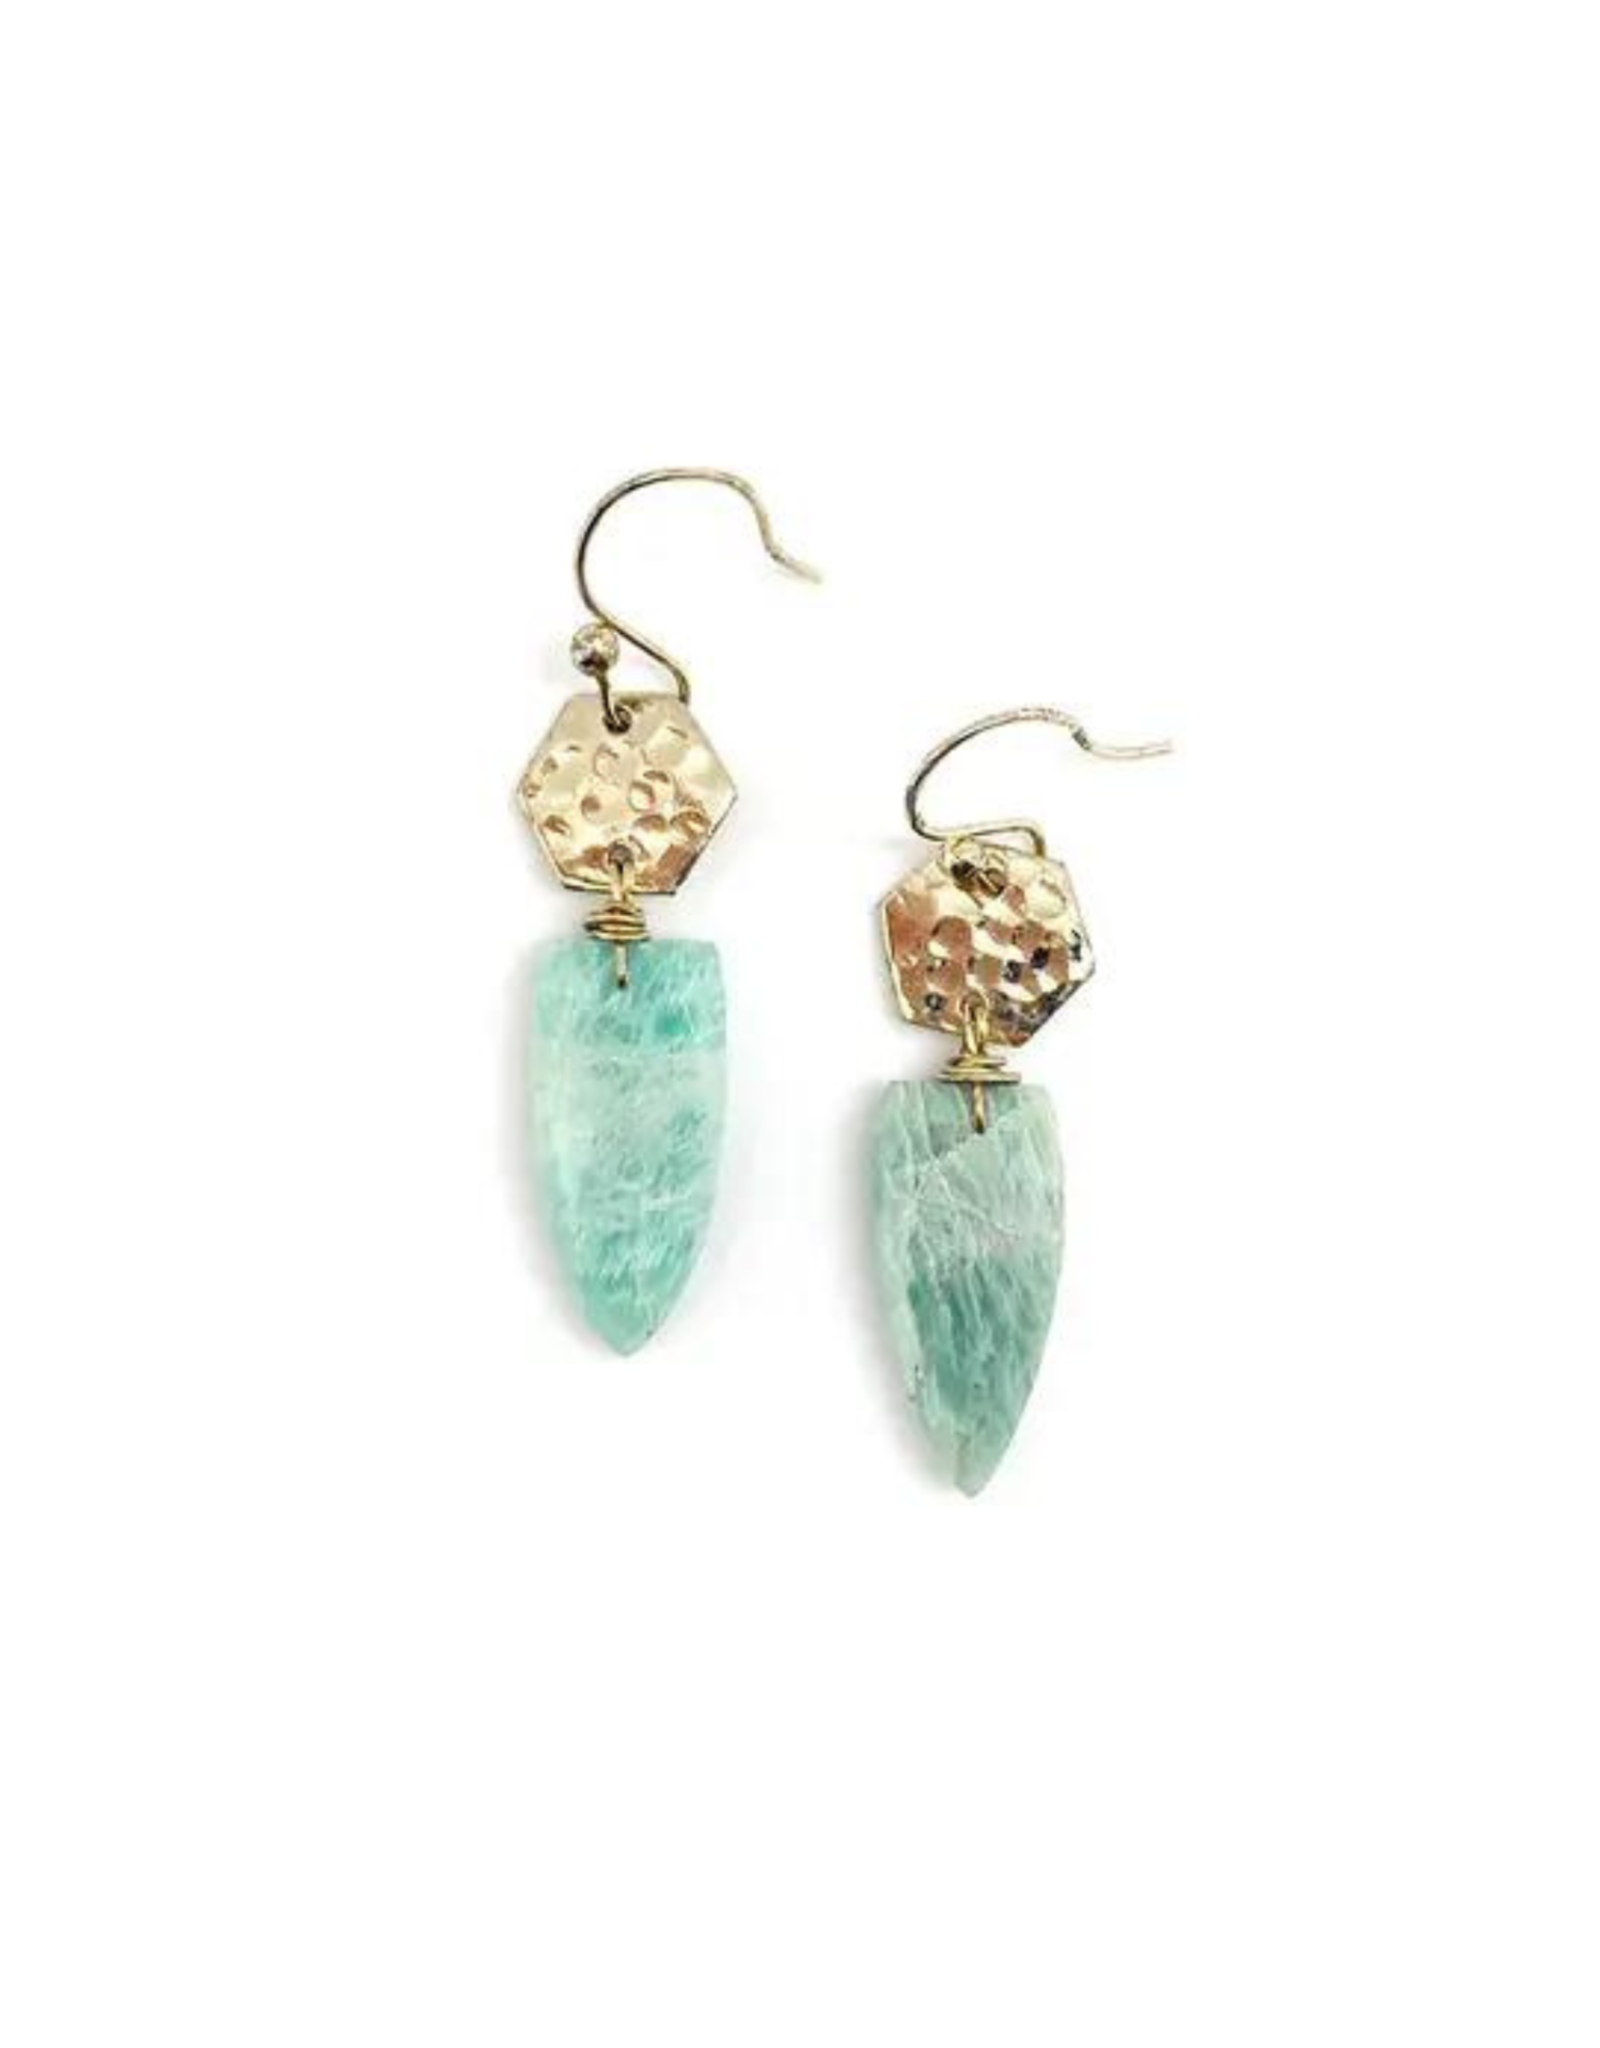 Faire/Anju Jewelry EARRINGS-AKRITI G/LG FACETED